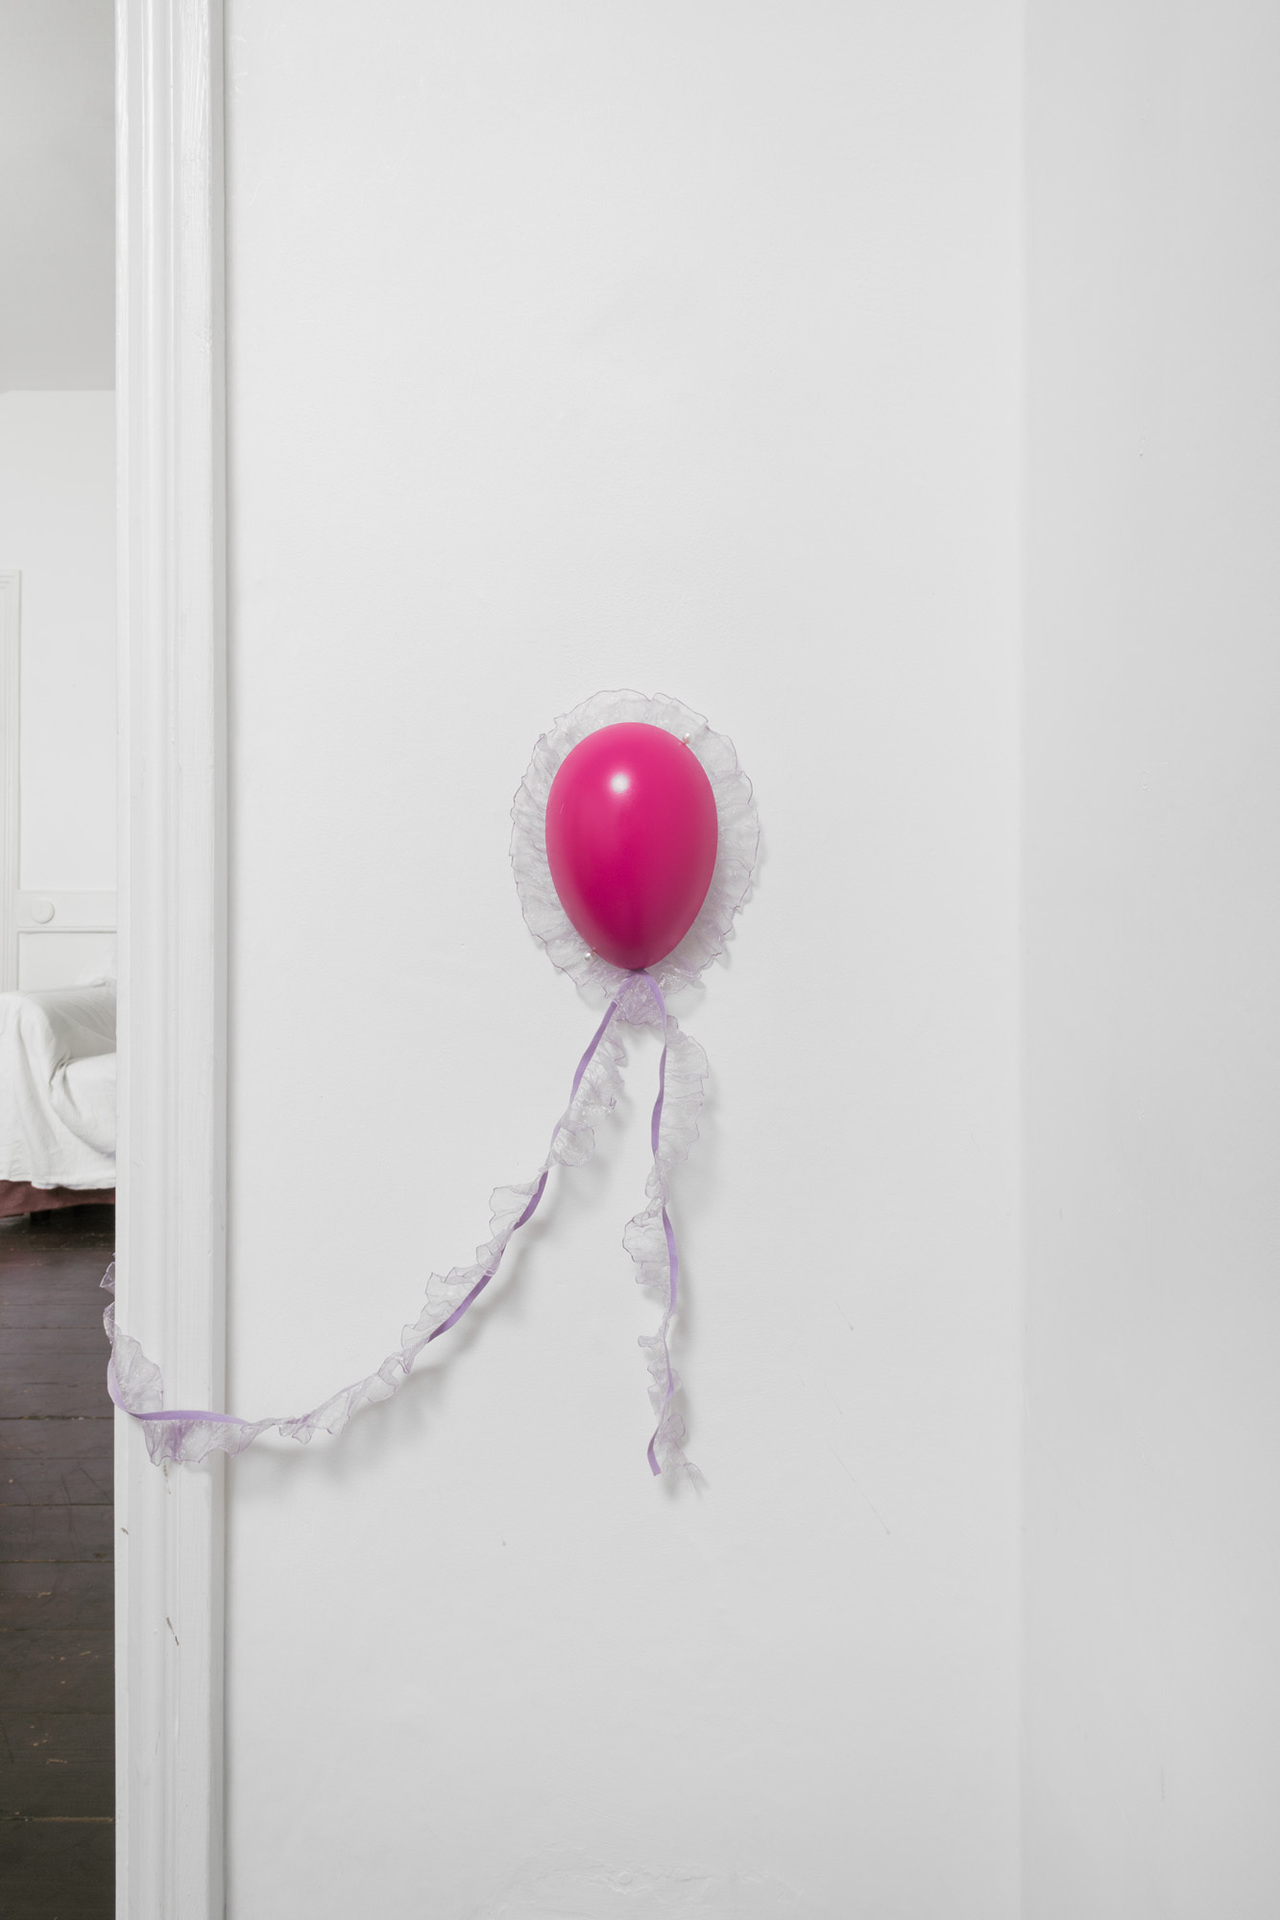 Daphne Ahlers - Bump, 2020, plaster, pins, pearls, ribbon, 15 x 10 x 5.5. cm